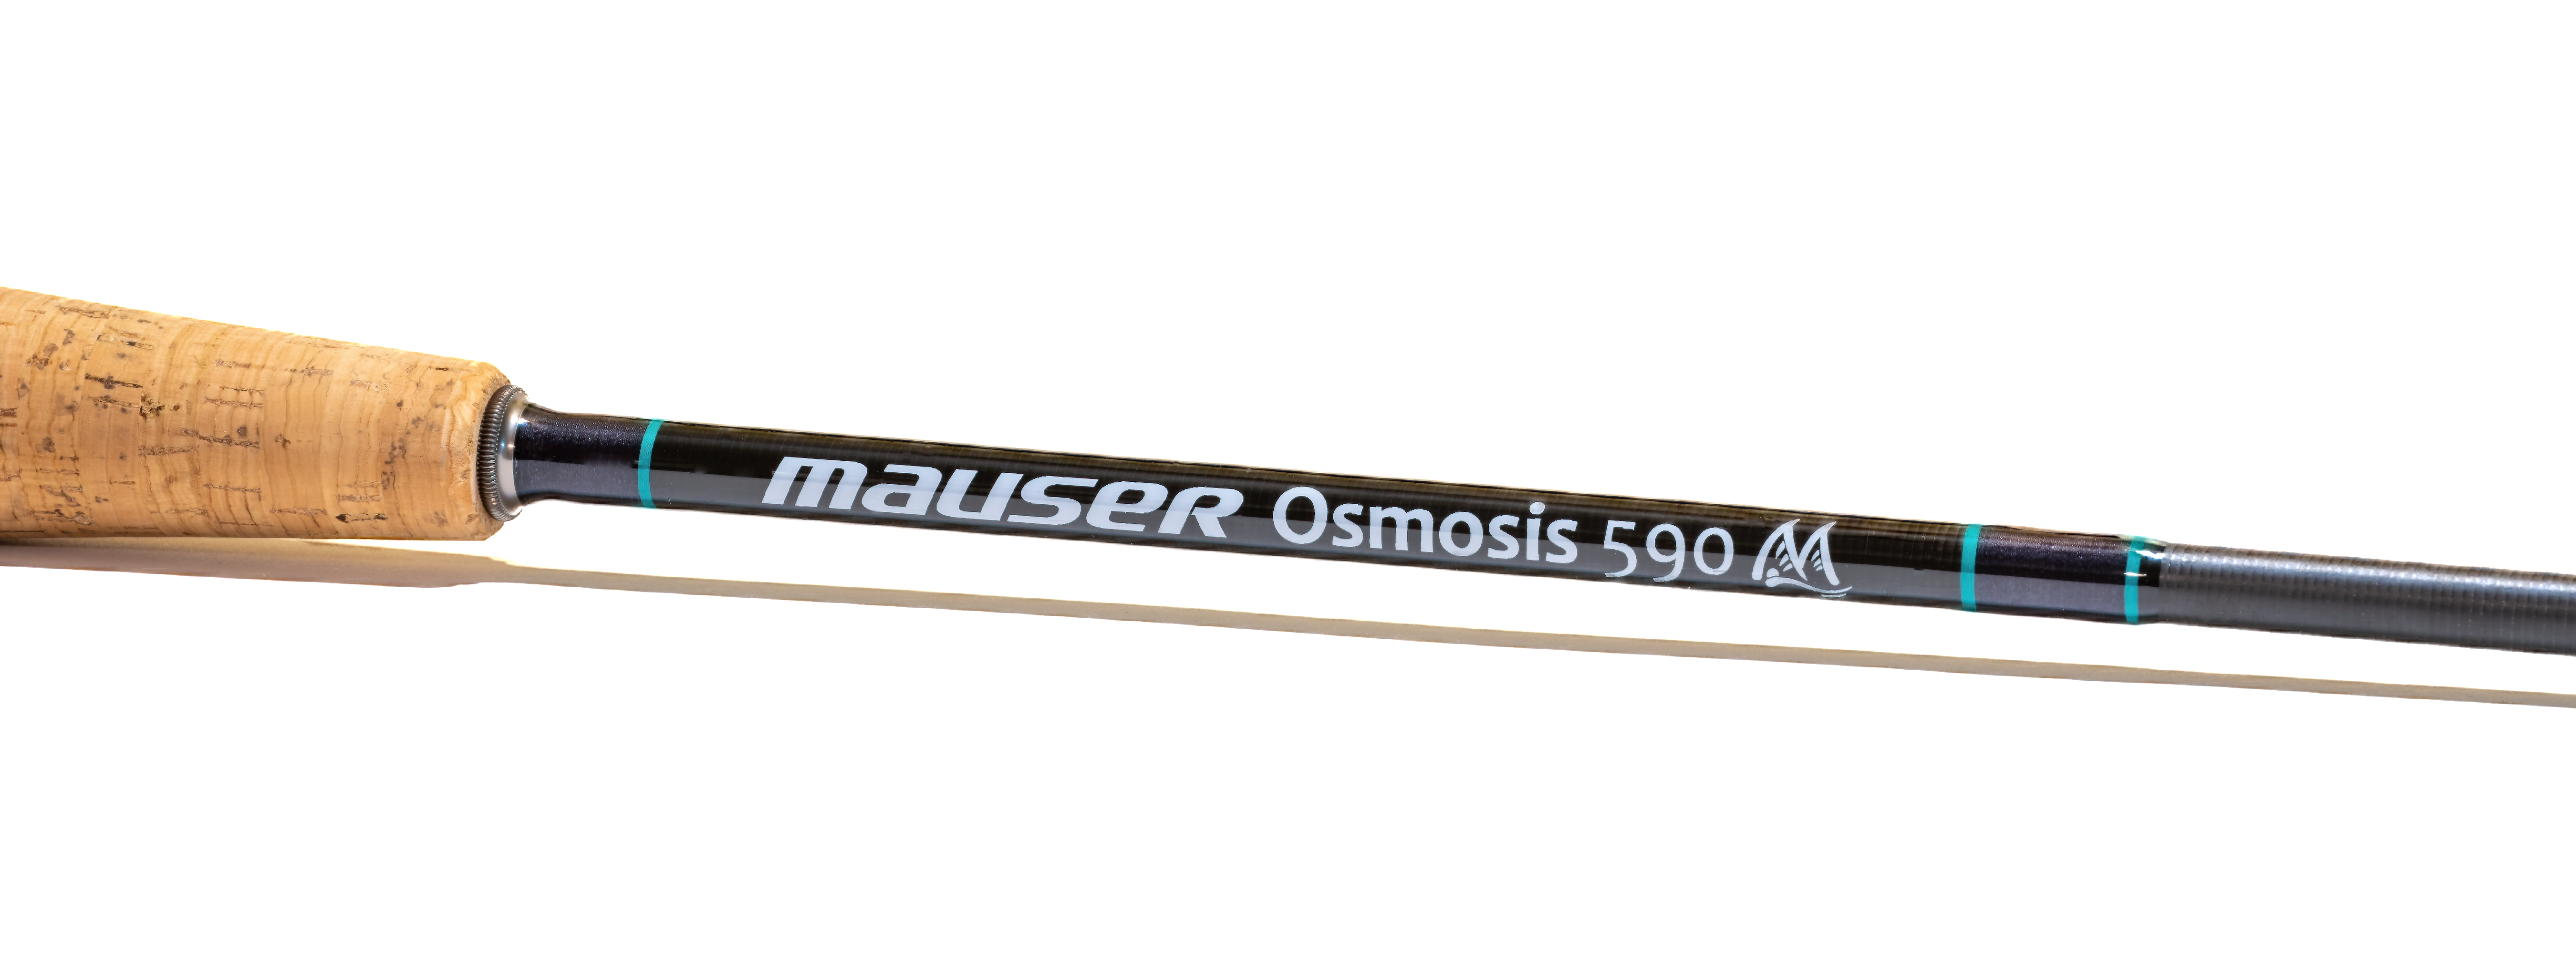 Mauser Osmosis 590